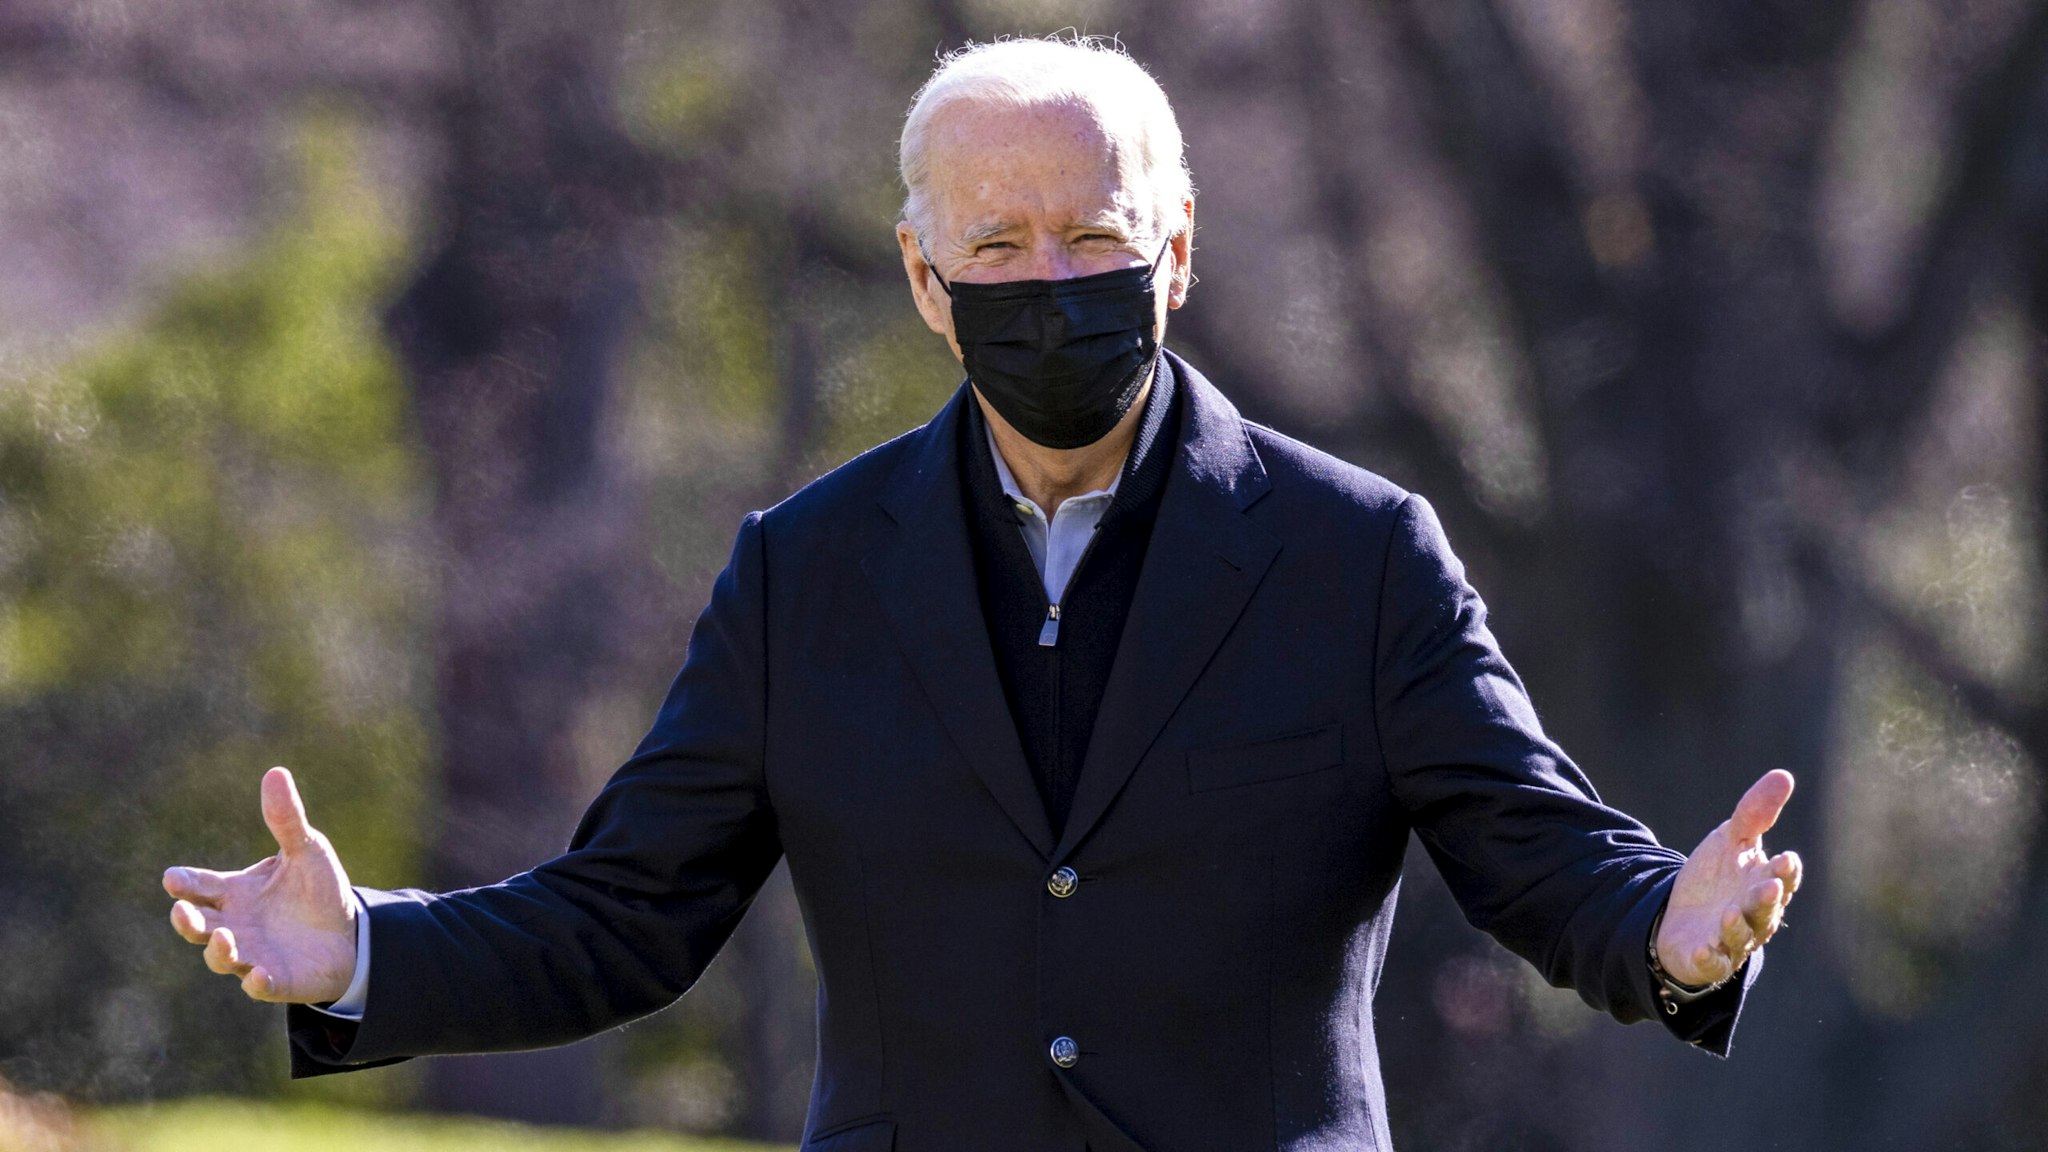 WASHINGTON, DC - DECEMBER 12: President Joe Biden walks on the South Lawn of the White House on December 12, 2021 in Washington, DC. The first family spent the weekend in Wilmington, Delaware.